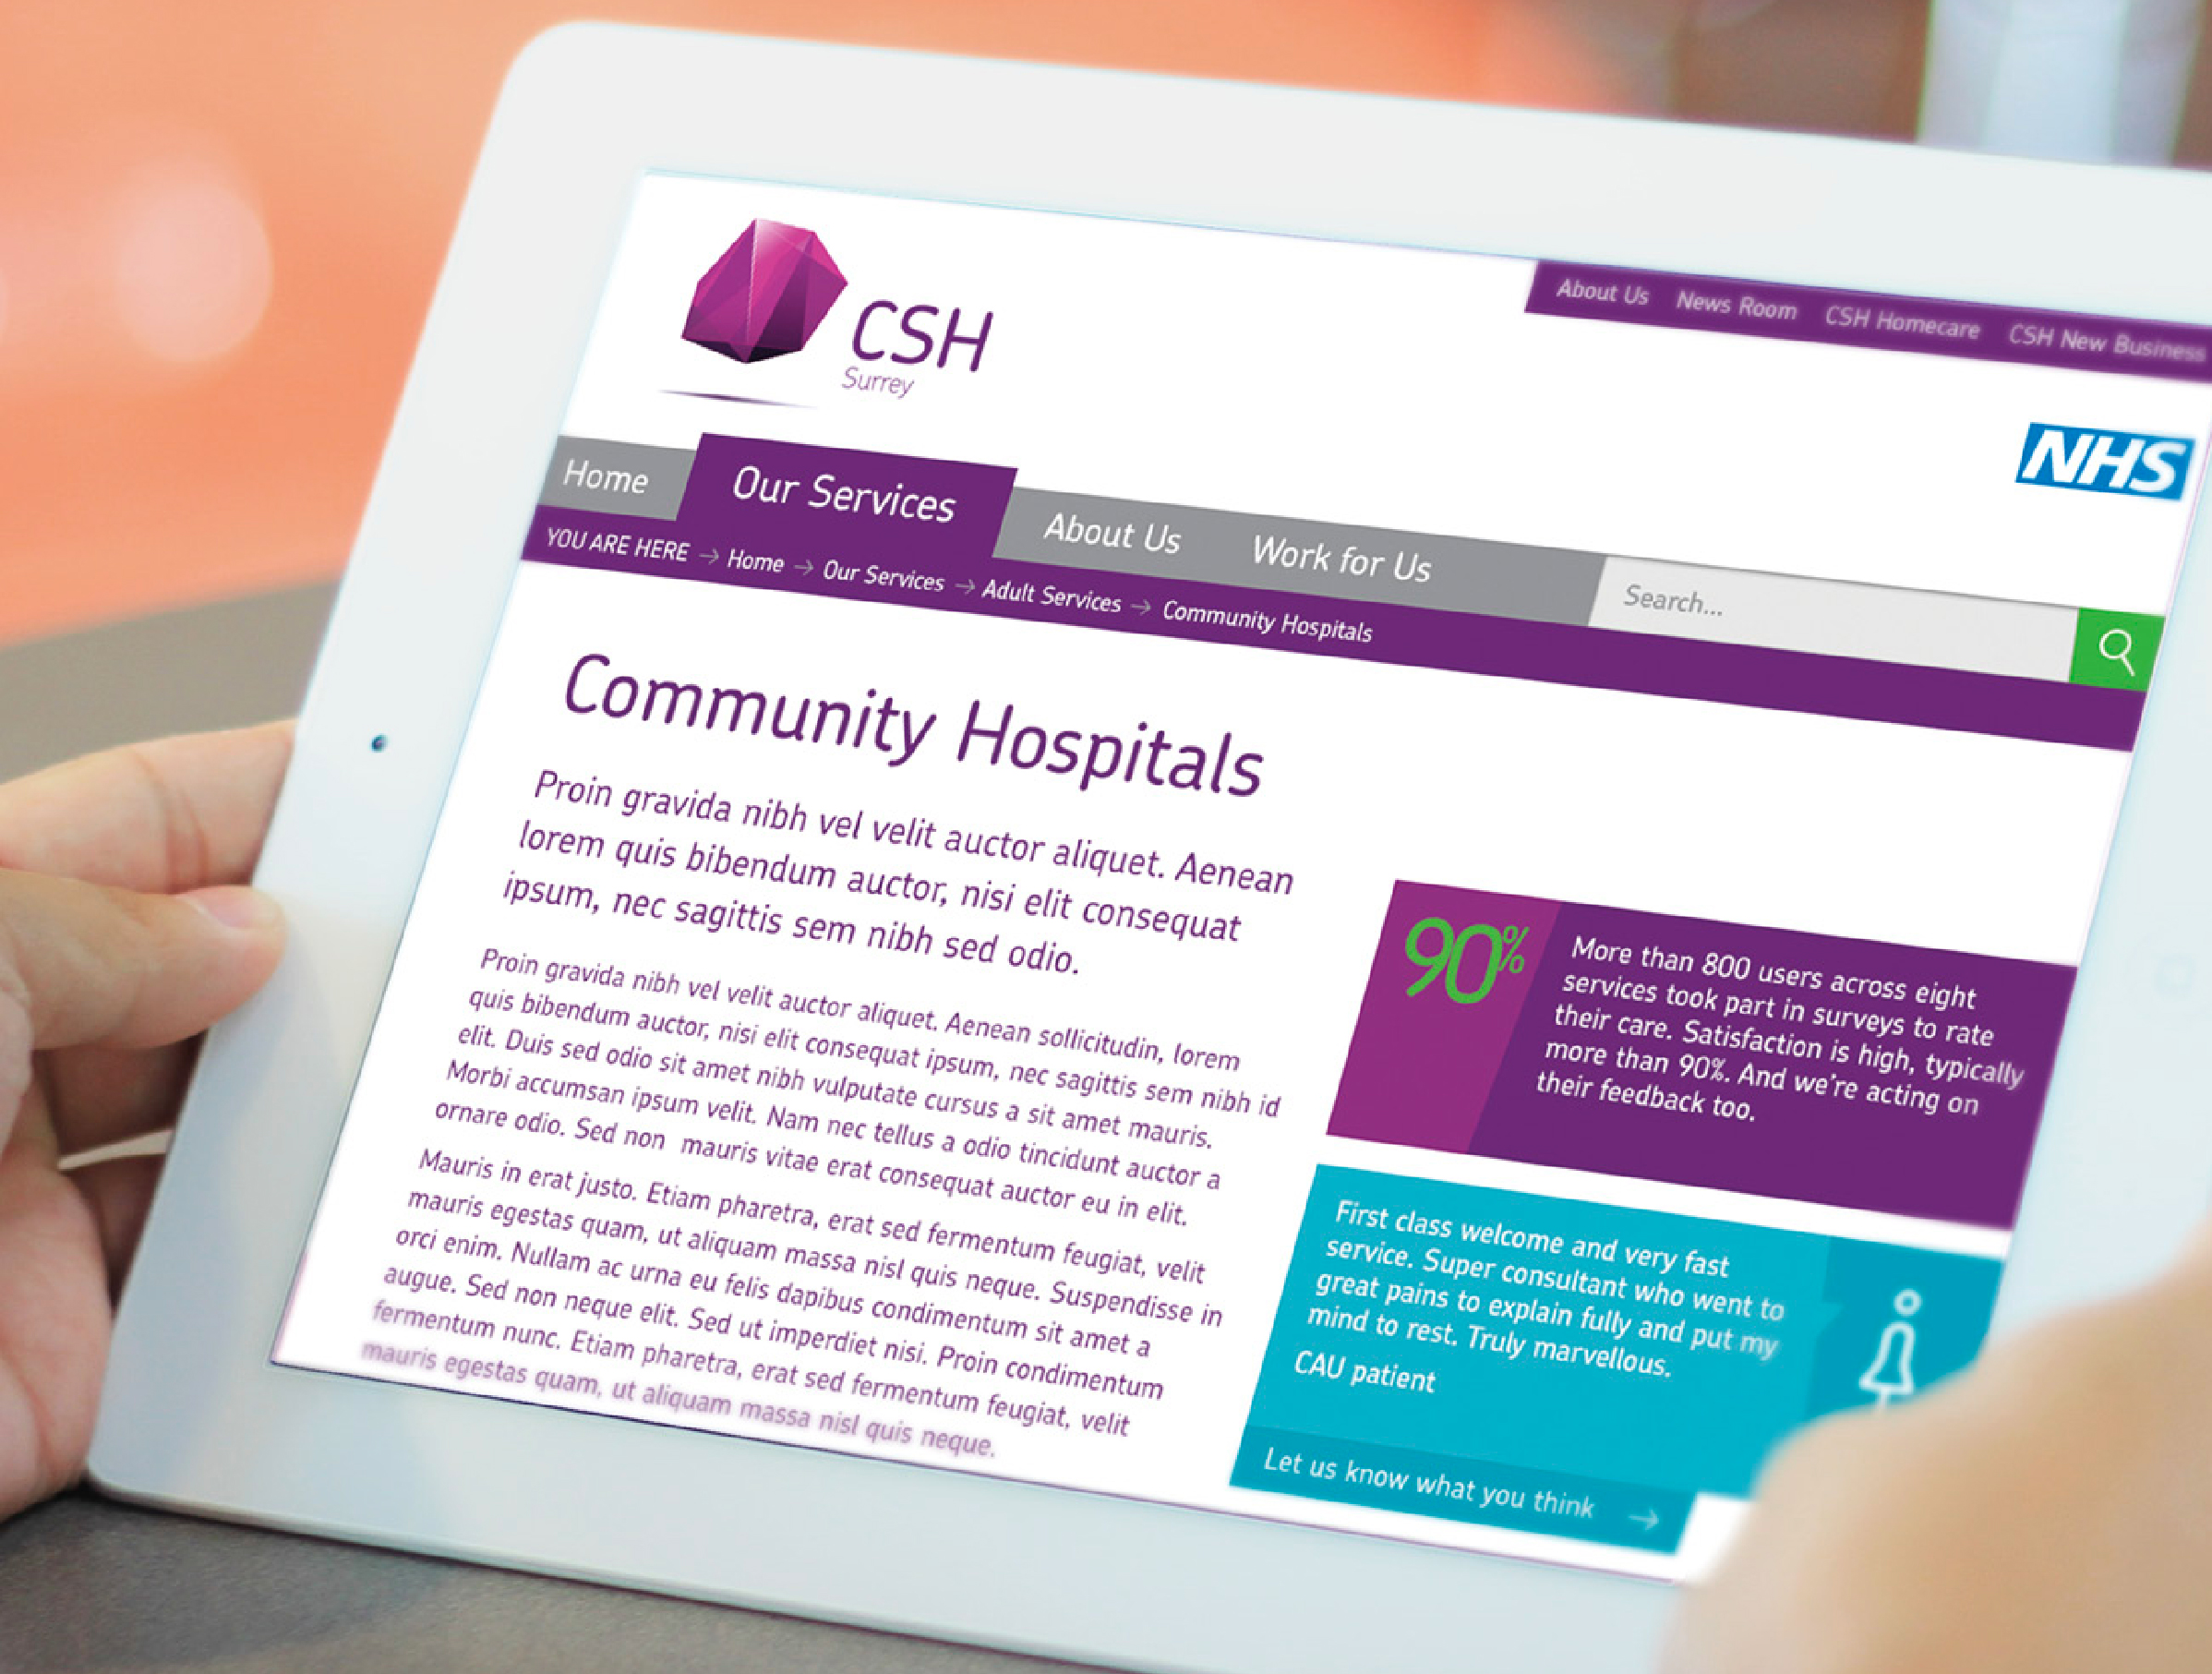 CSH Surrey website on ipad